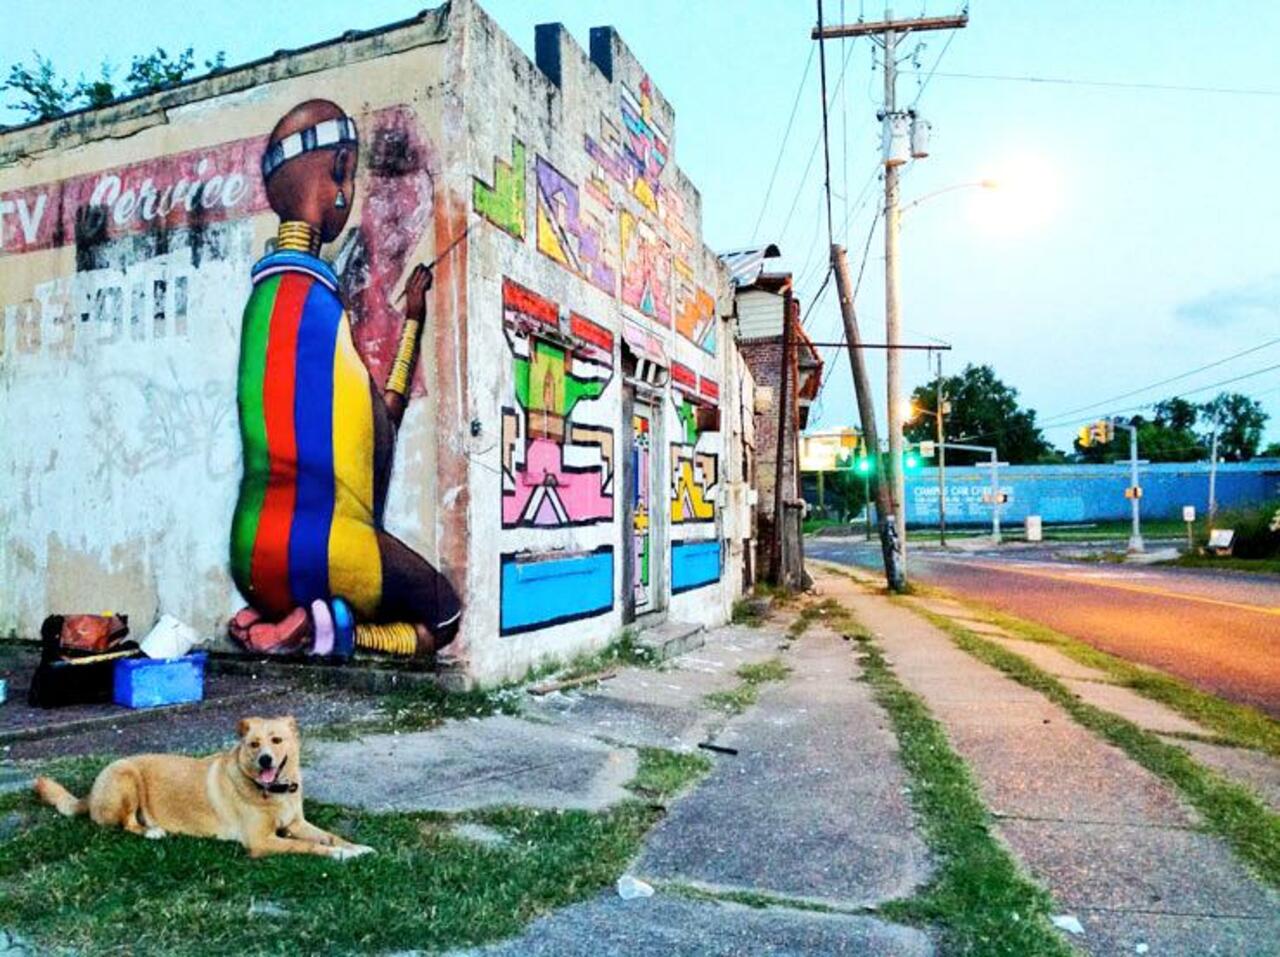 RT @Pitchuskita: Seth 
Baton Rouge (The Museum Of Public Art)
#StreetArt #art #UrbanArt #graffiti http://t.co/MxqwhUPdfo